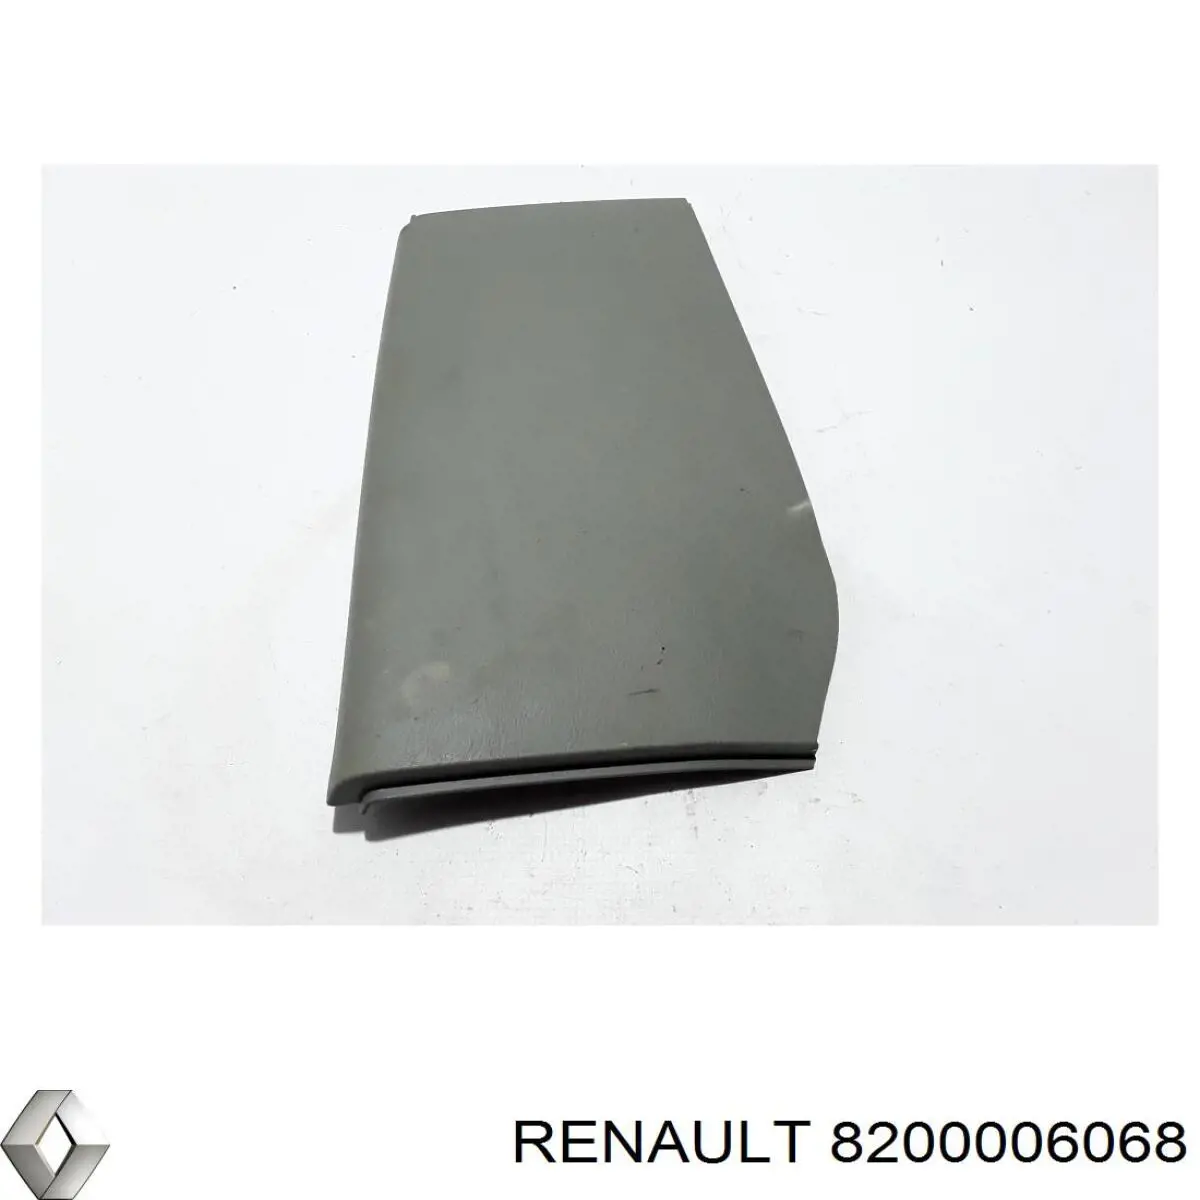 8200006068 Renault (RVI) cubierta de pilar interior parte media, inferior derecha